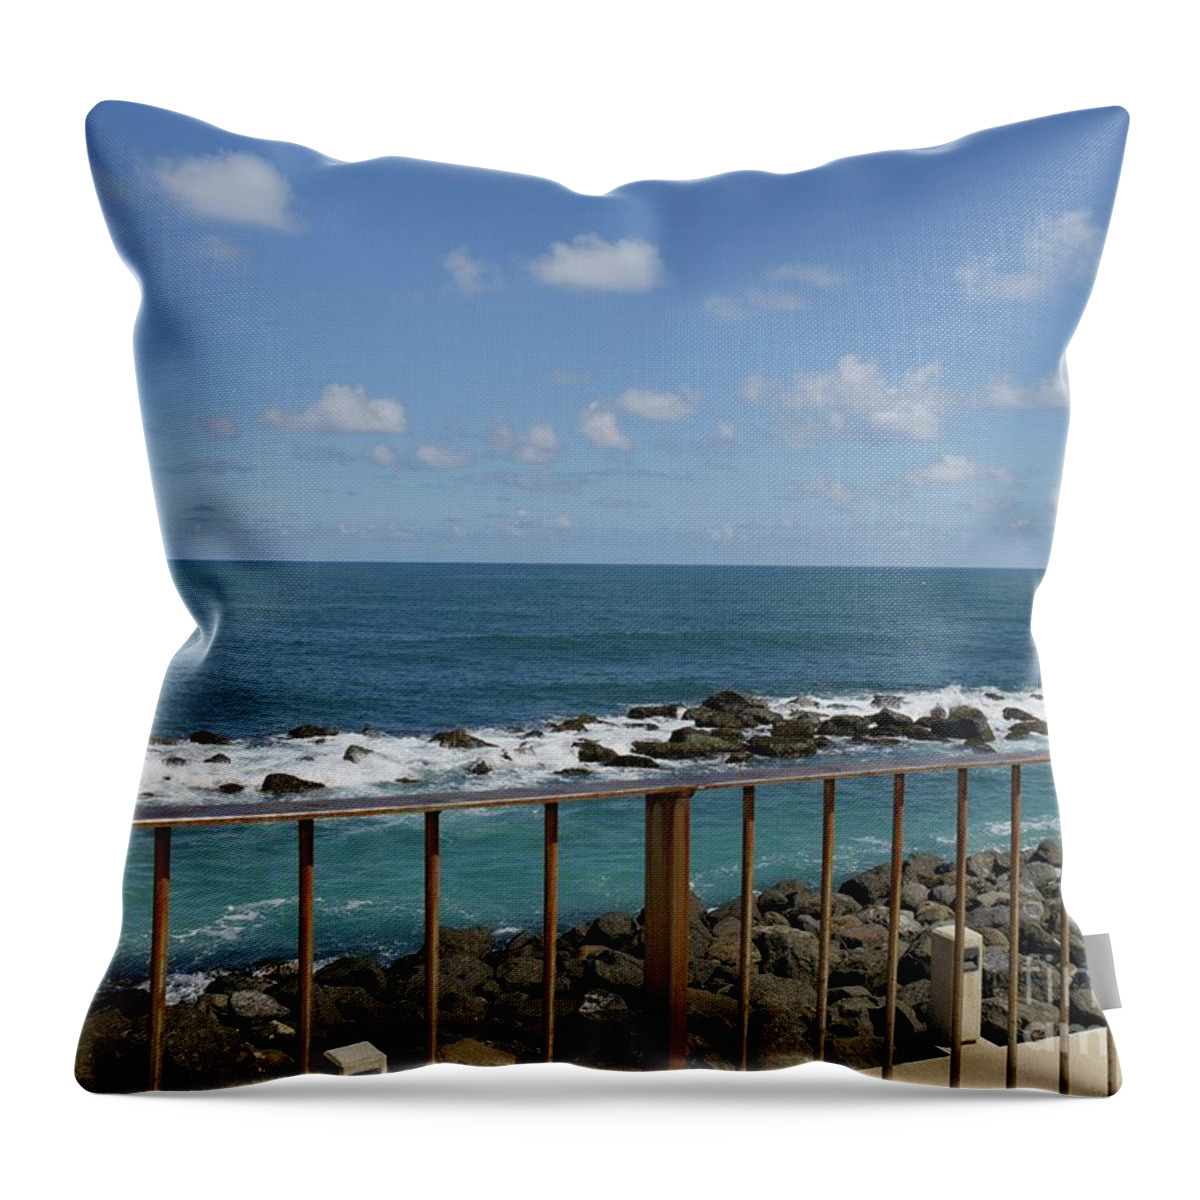 Sea Throw Pillow featuring the photograph Breakwater by On da Raks